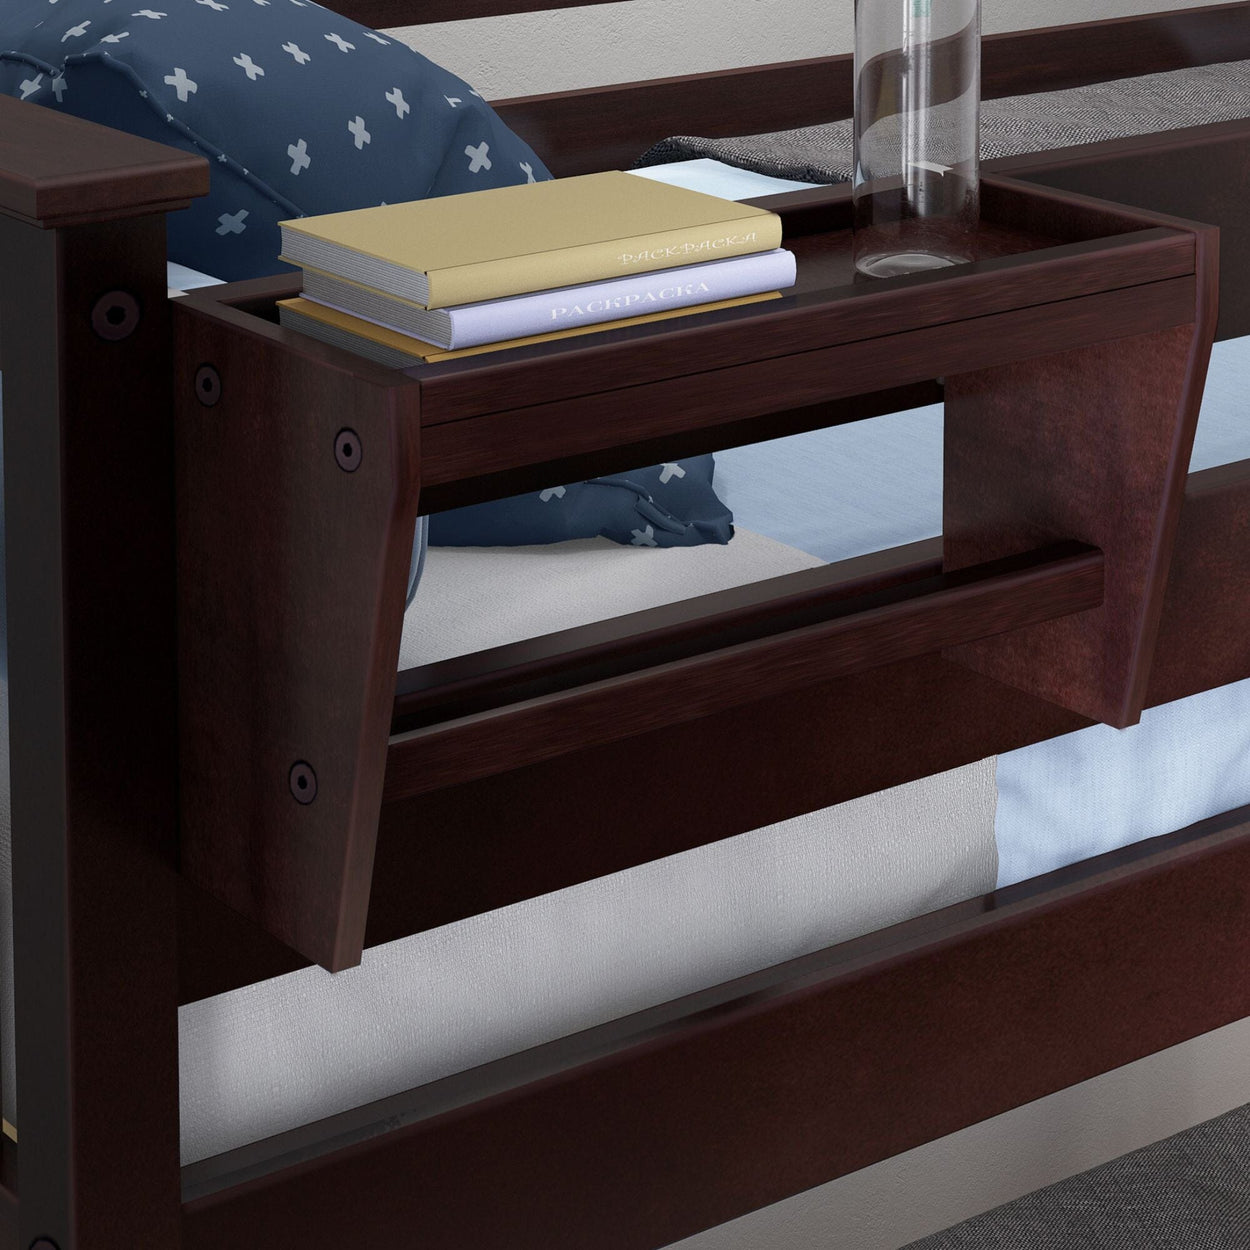 180099-005 : Furniture Bedside Tray, Espresso